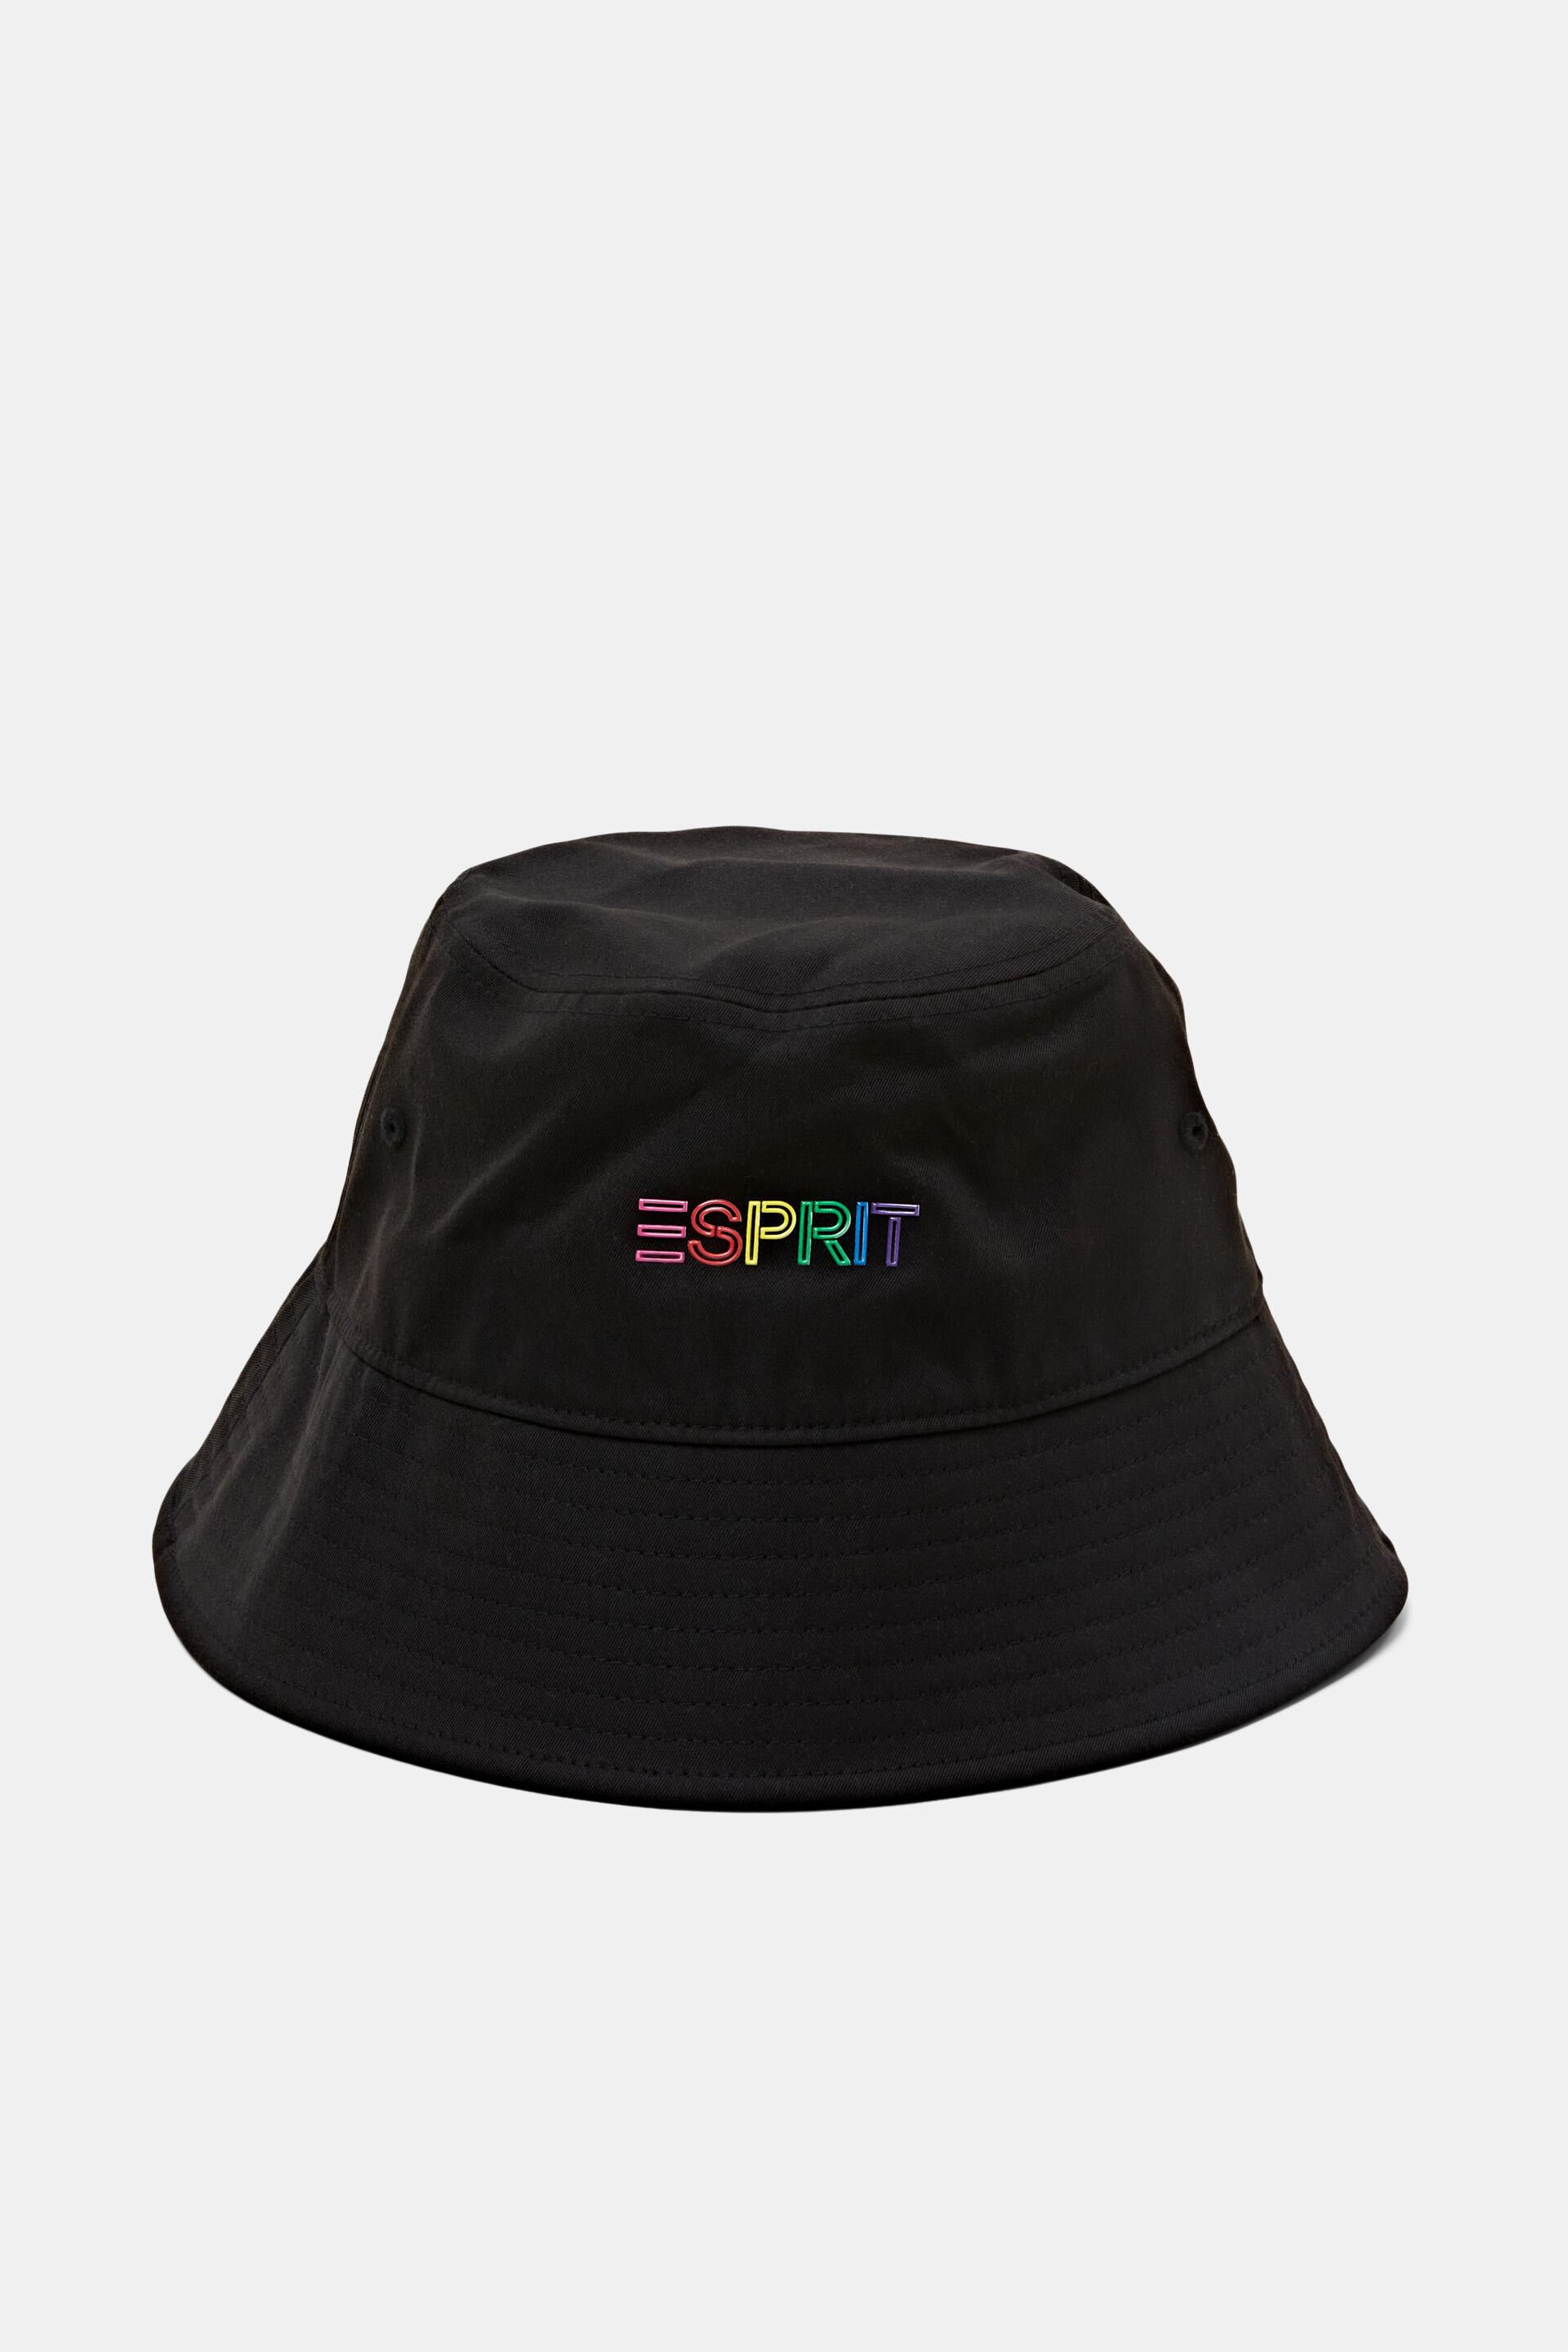 Esprit Appliqué Twill Bucket Hat